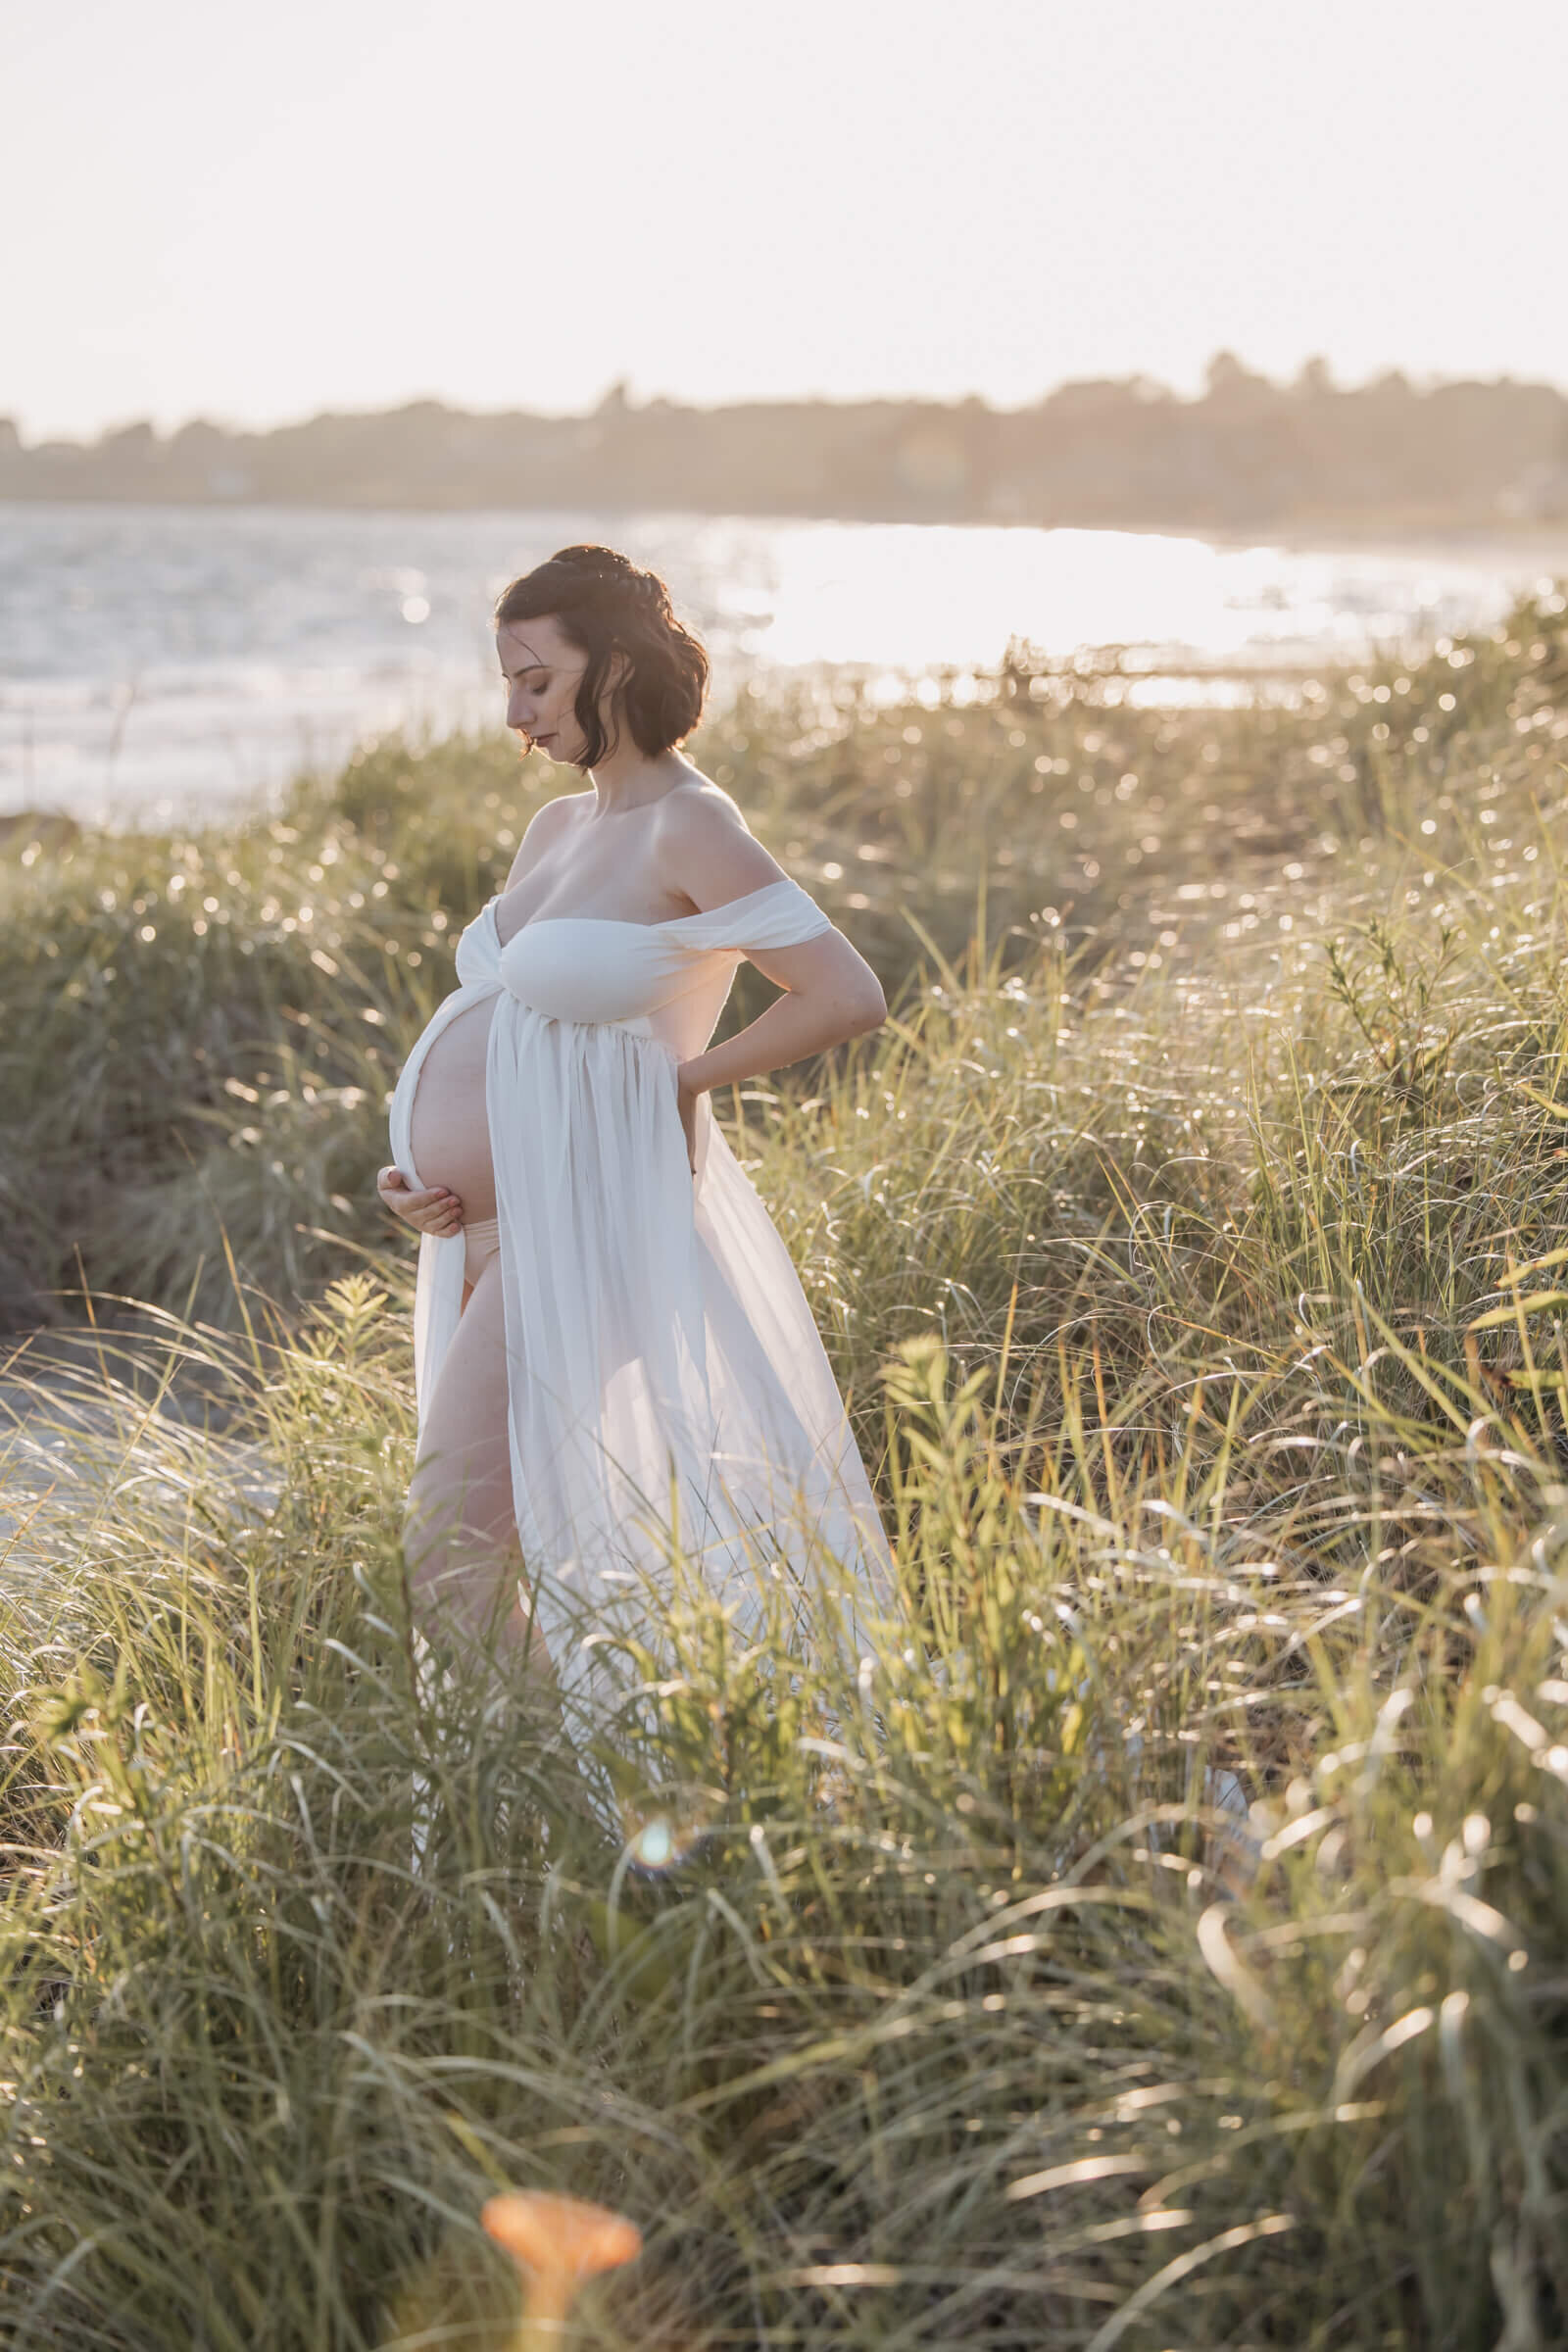 Pregnant woman in white sheer open dress in tall grass in glowy sunlight